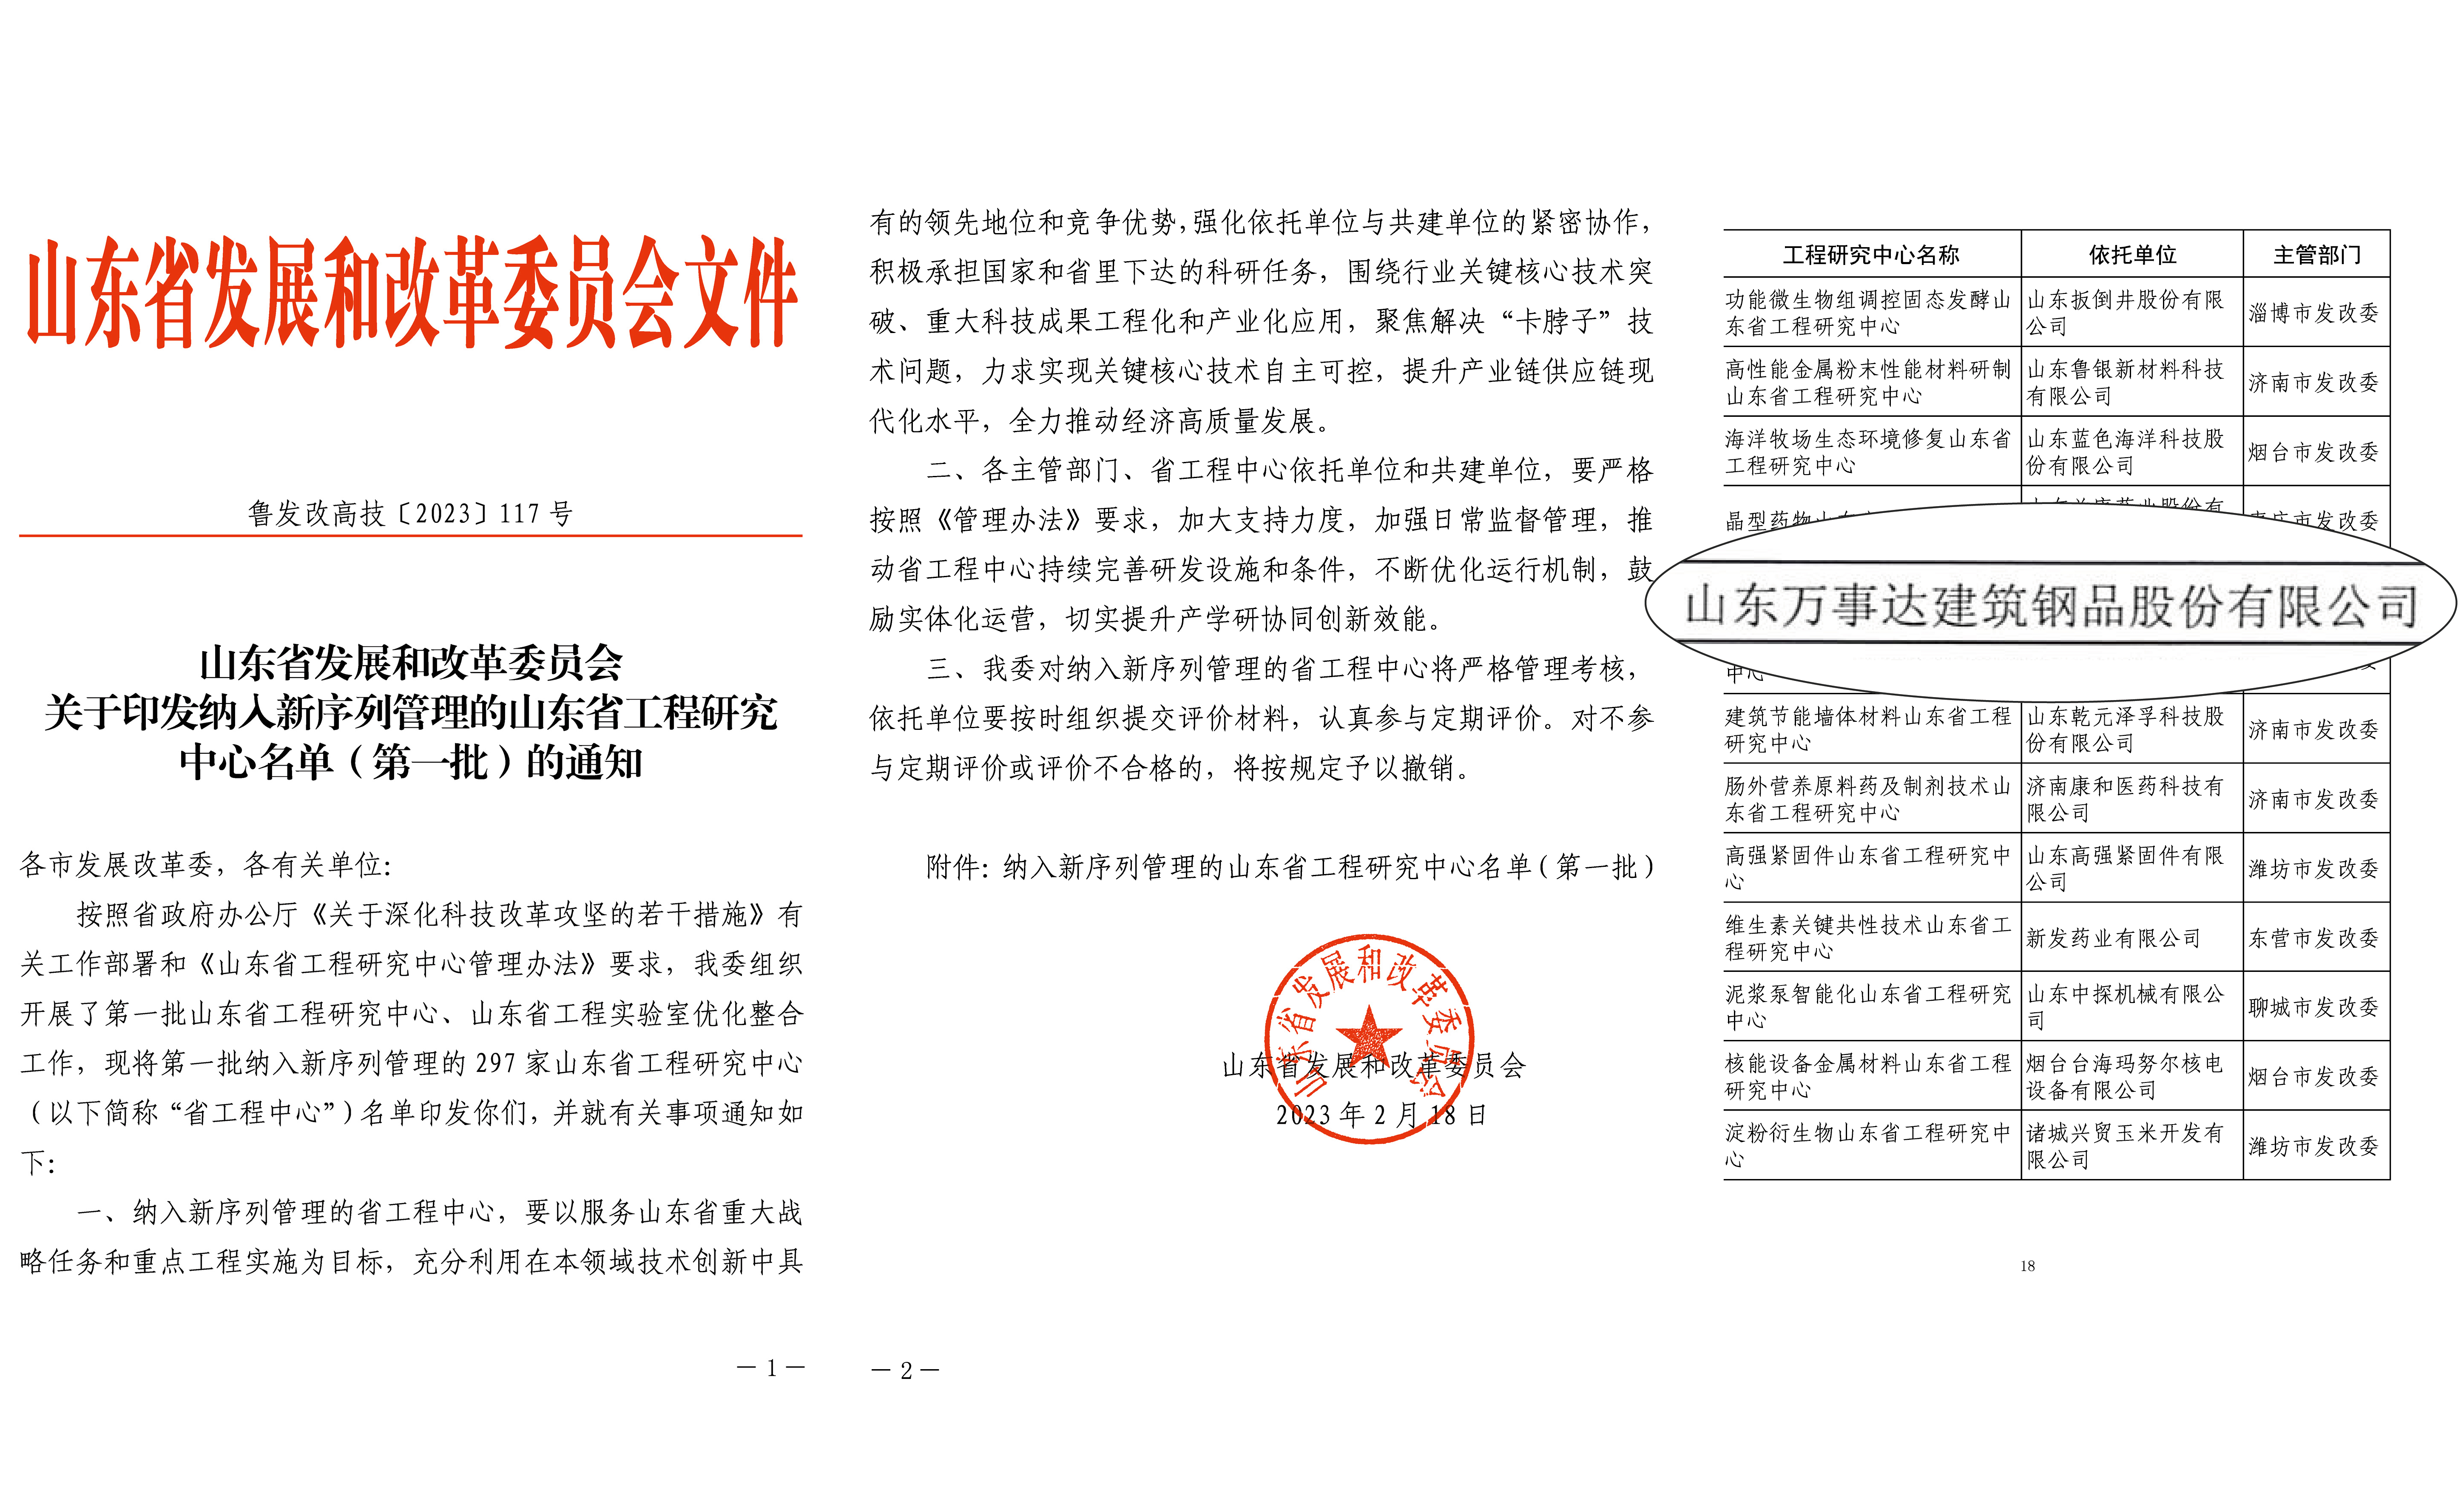 Shandong Provincial Engineerin